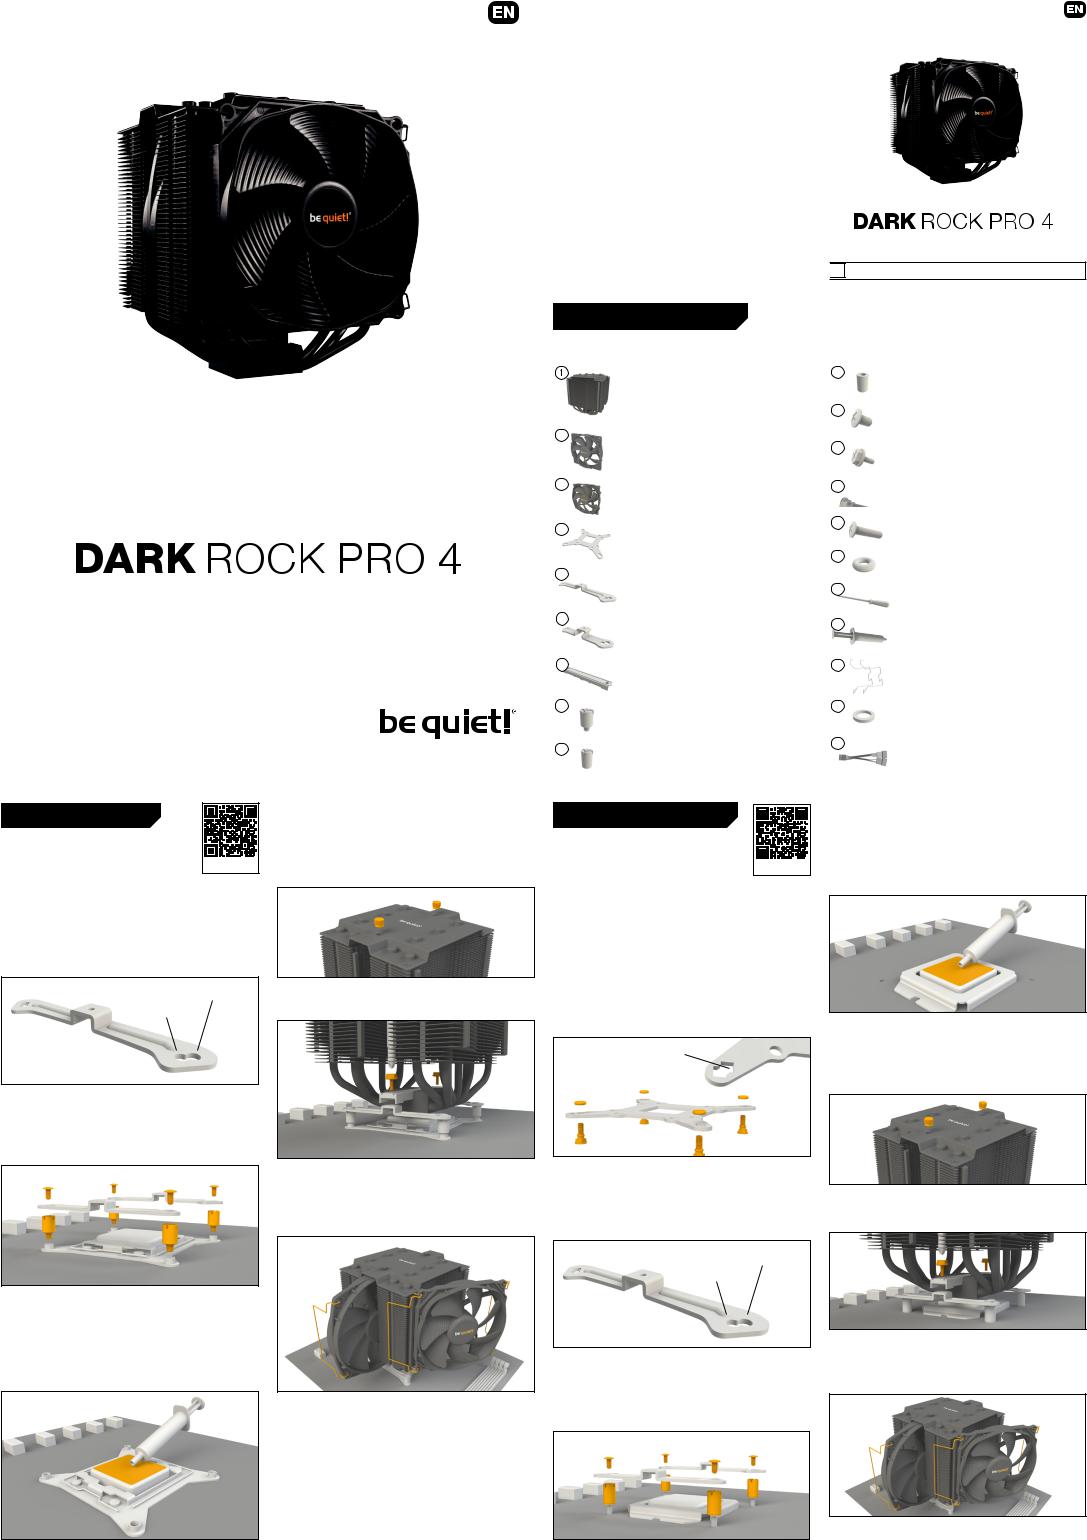 be quietl Dark Rock Pro 4 operation manual